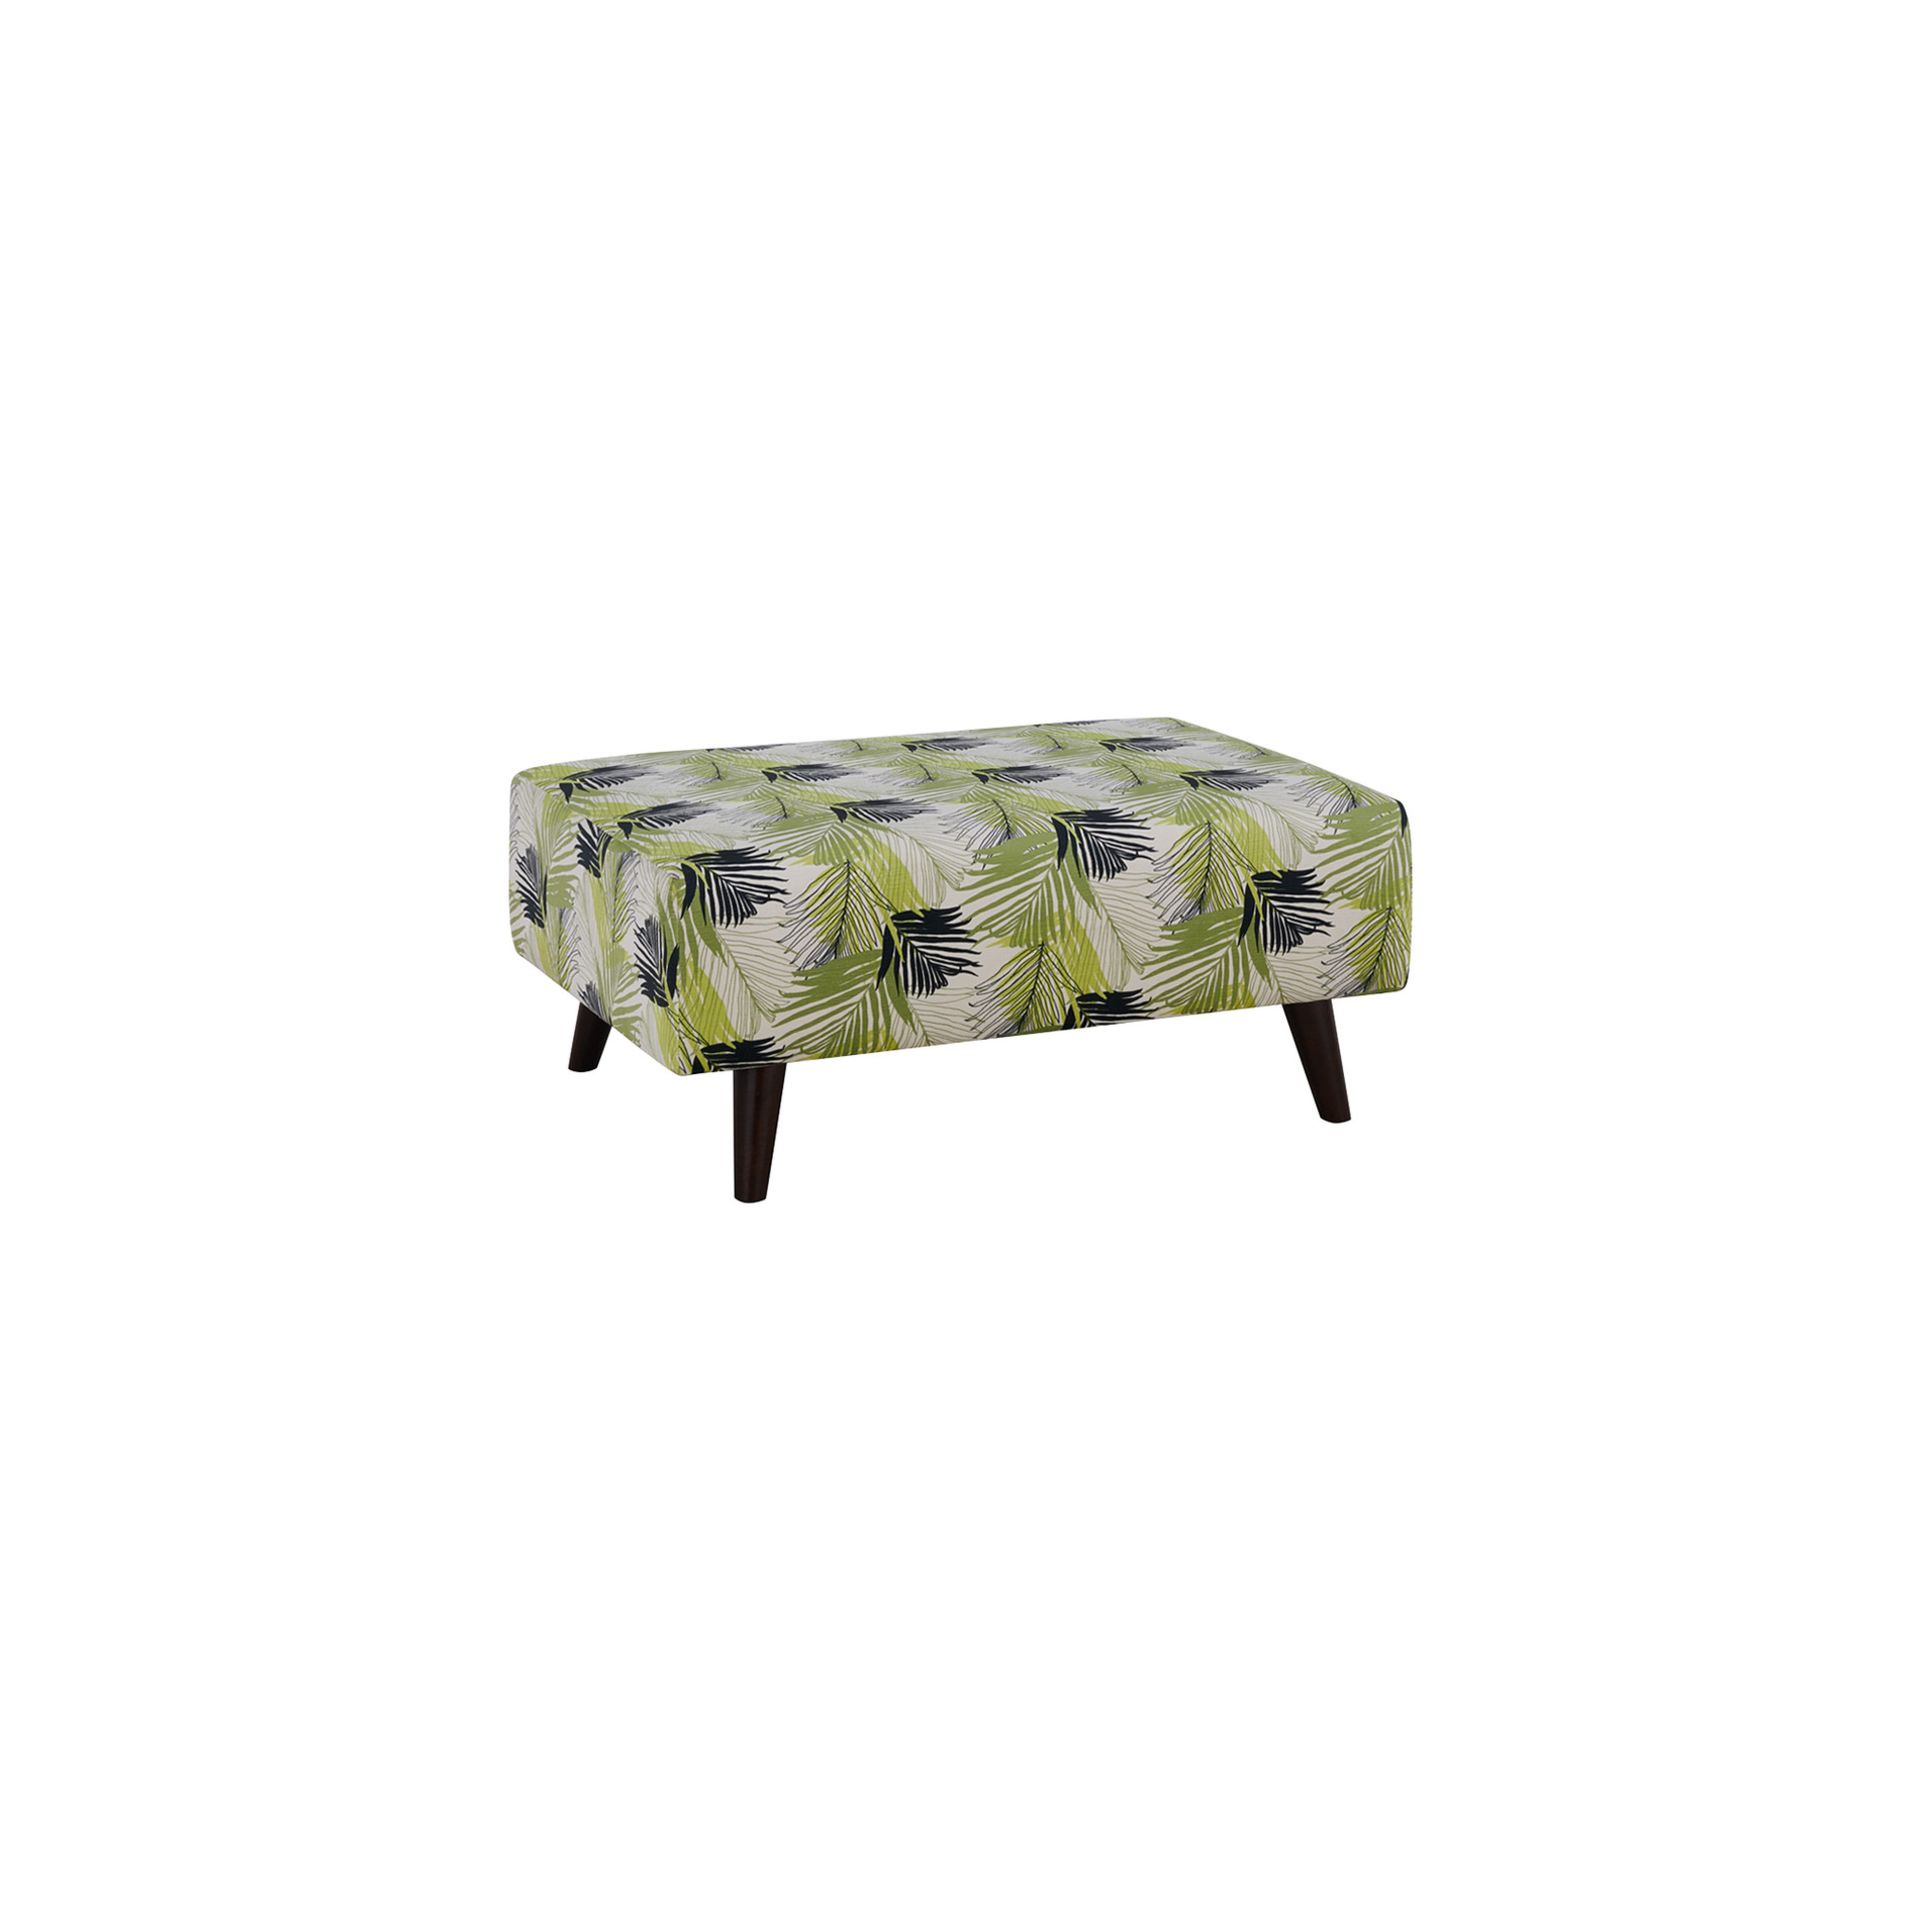 Oak Furnitureland Fern Accent Footstool In Green Fabric RRP 329.99 Fern accent footstool are covered